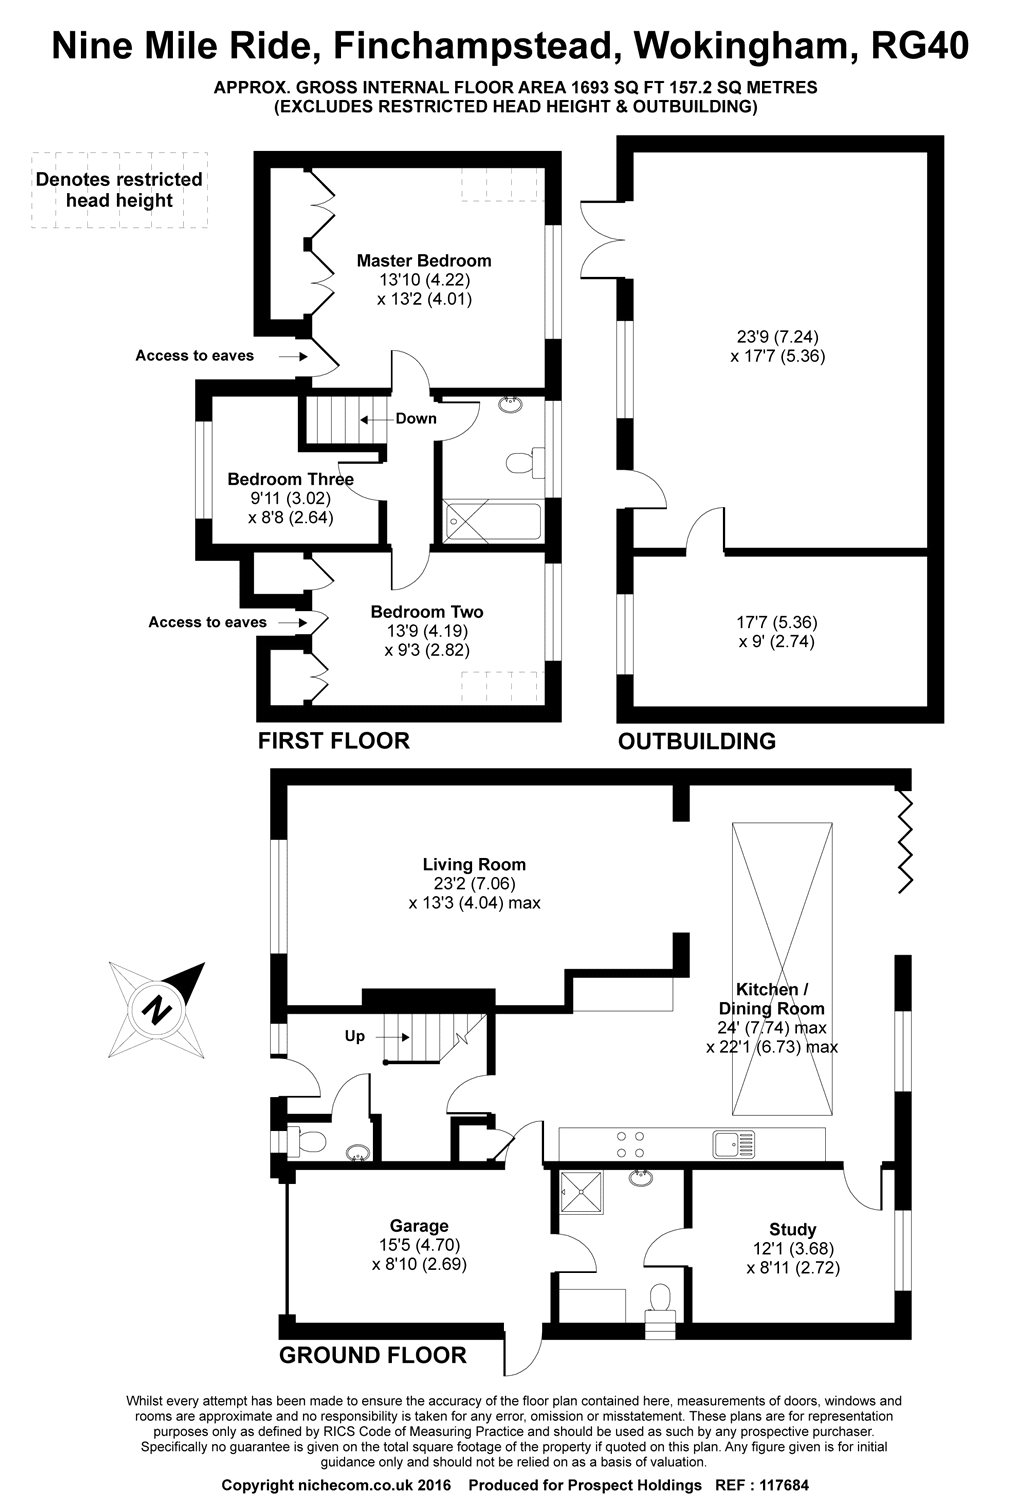 4 Bedrooms Detached house to rent in Nine Mile Ride, Finchampstead, Wokingham, Berkshire RG40